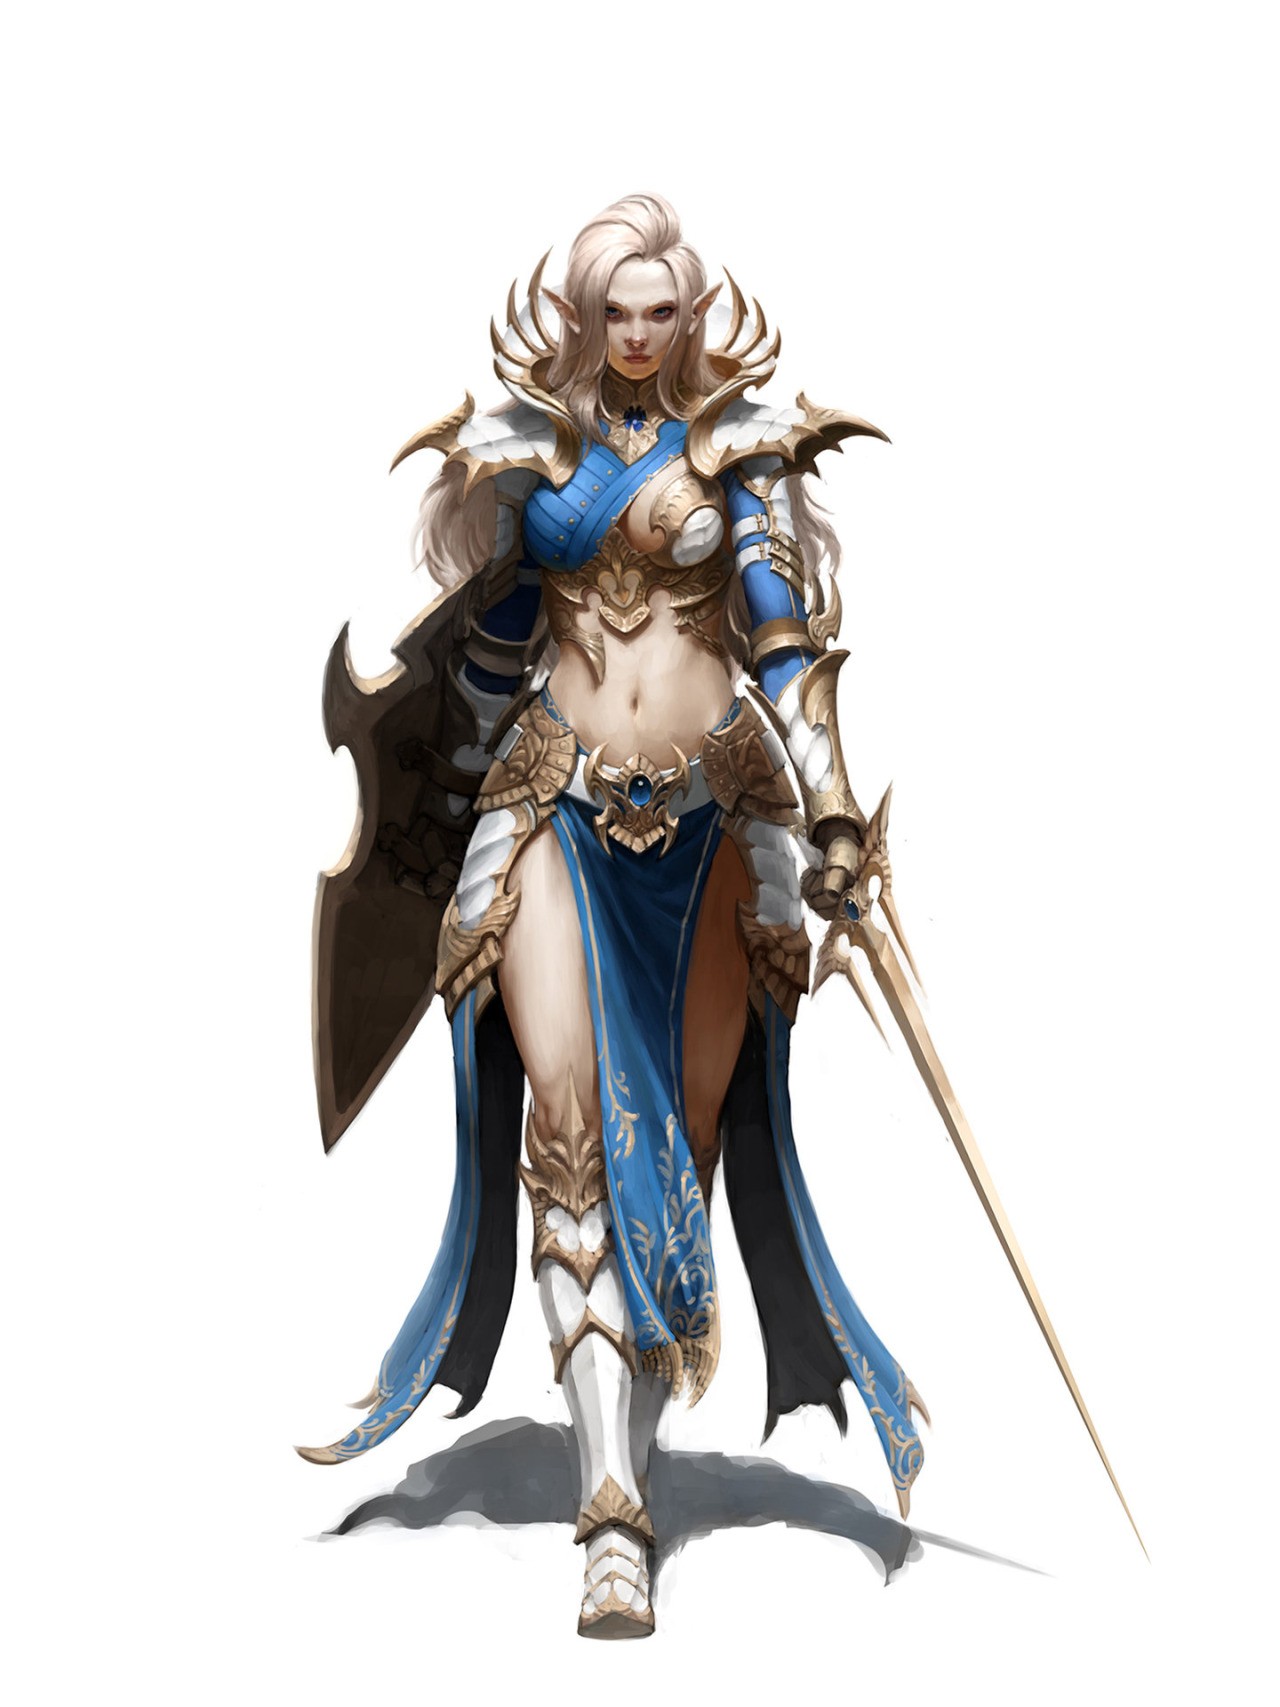 General 1280x1707 bikini armor shield blonde pointy ears artwork simple background white background belly fantasy girl fantasy art women